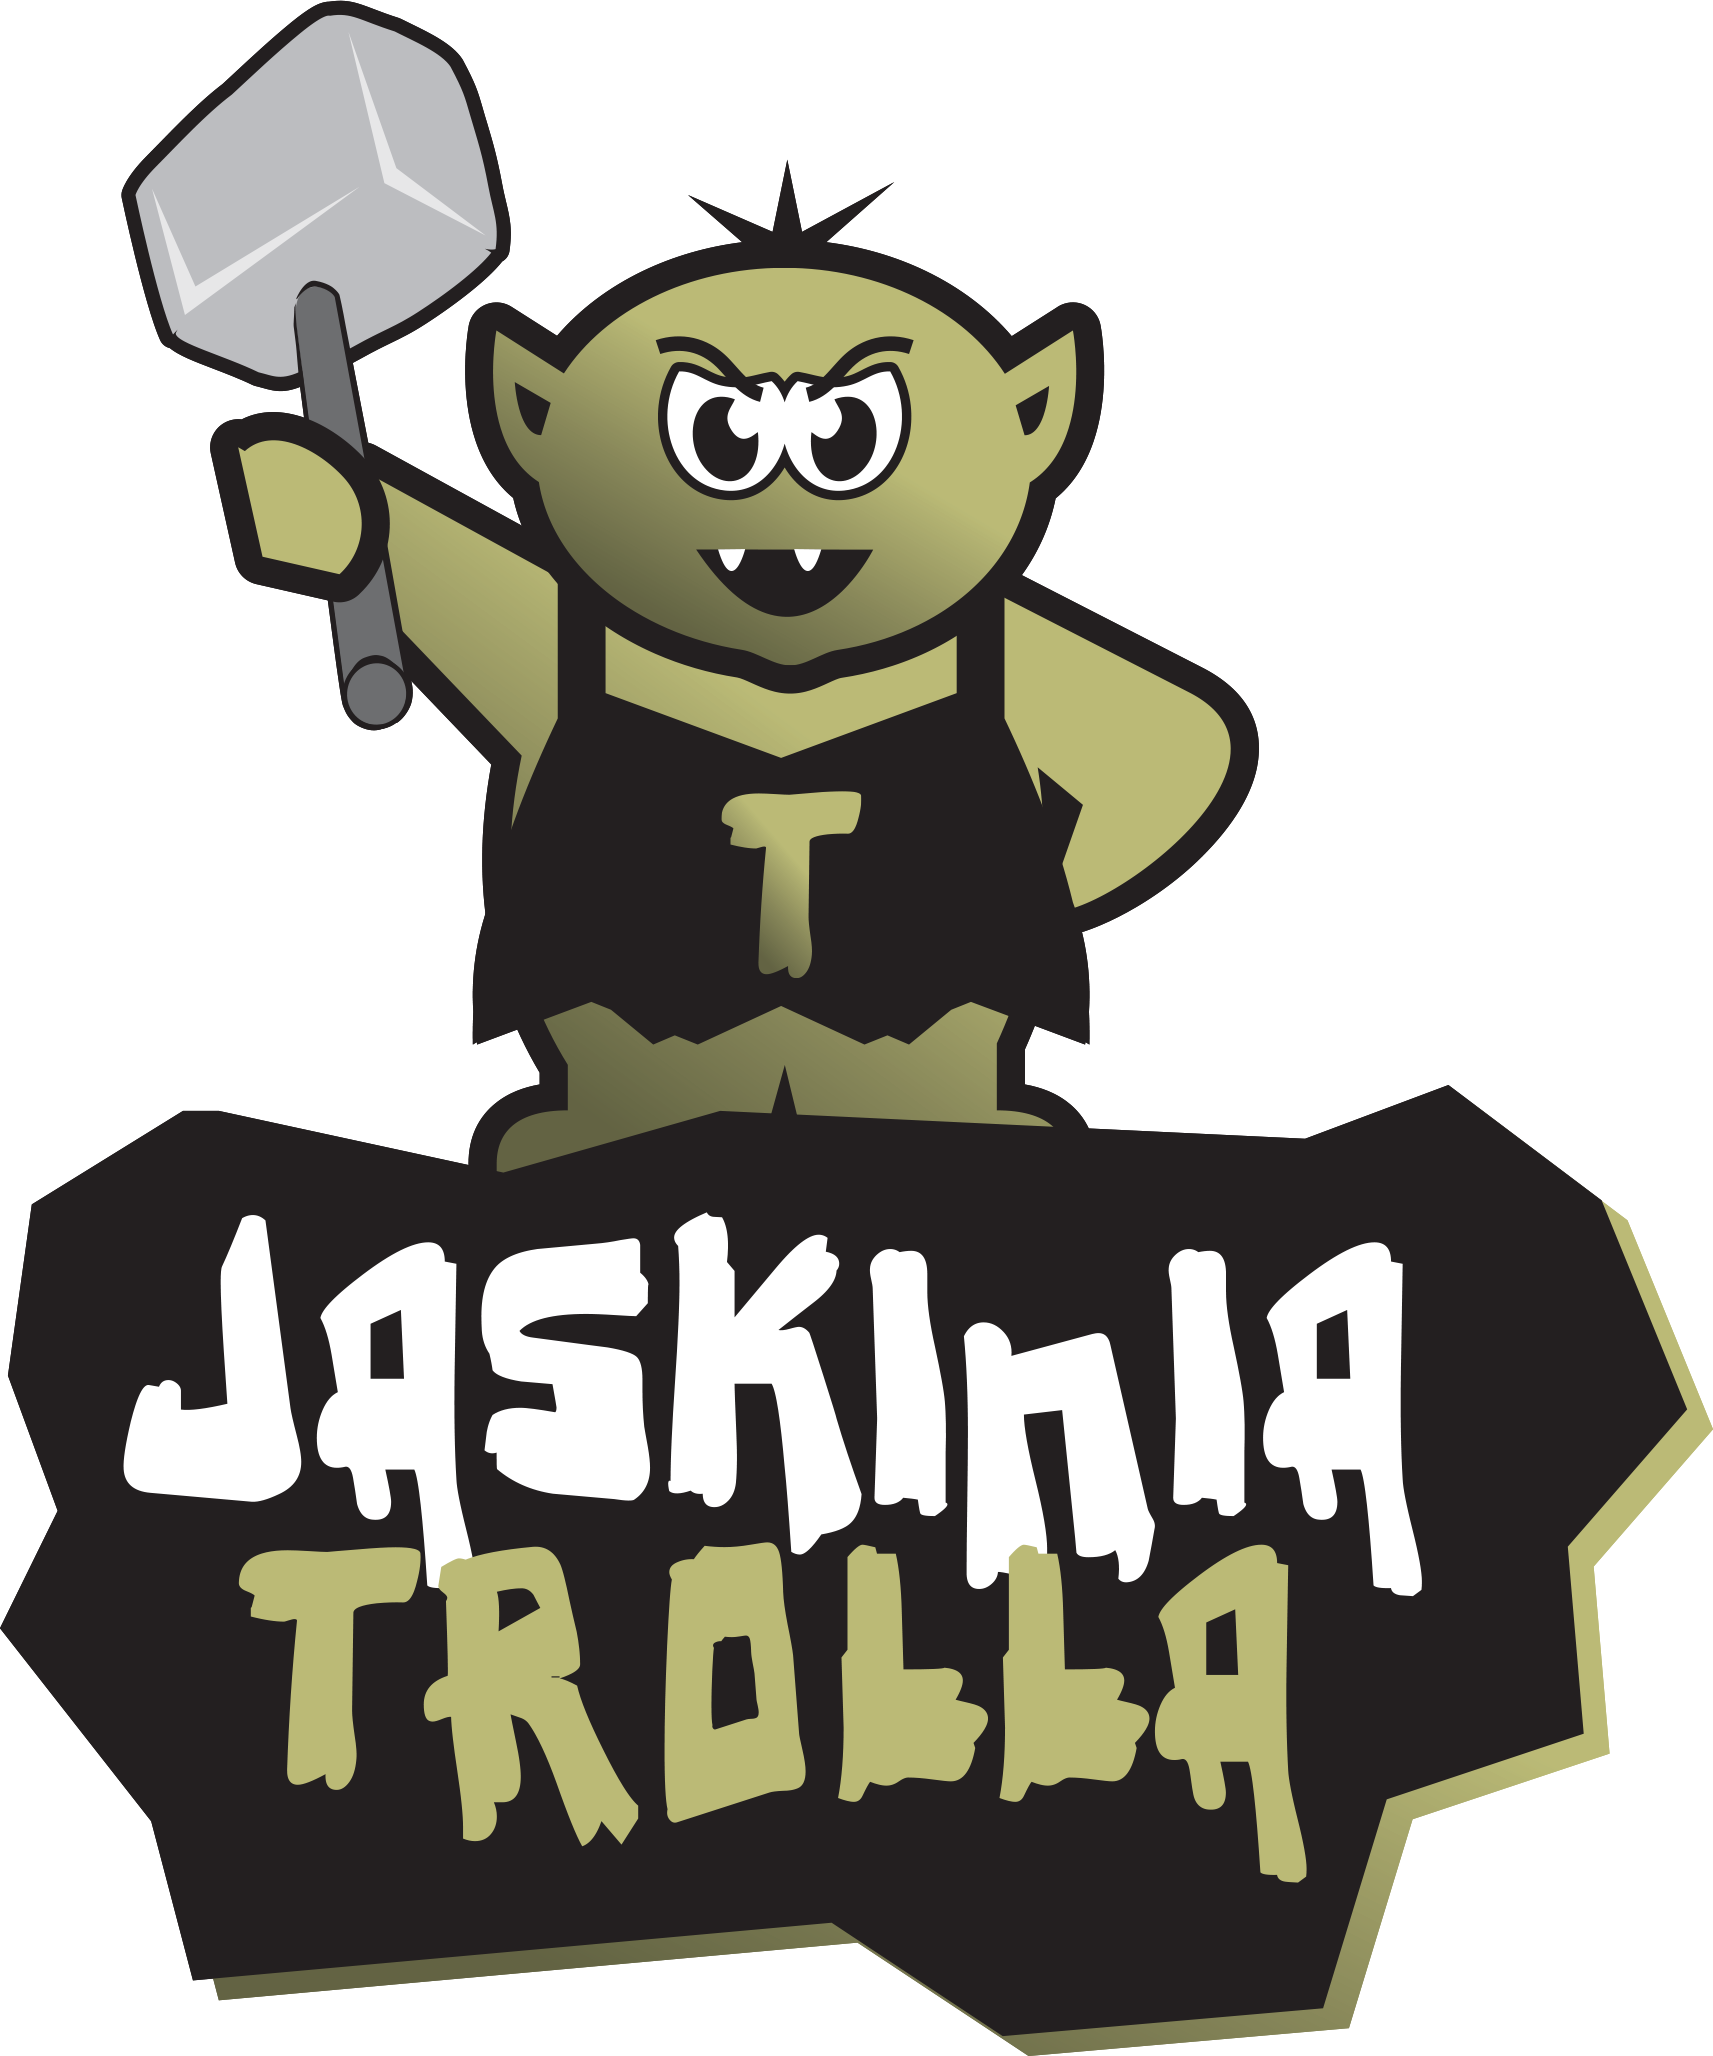 logo-jaskinia-trolla